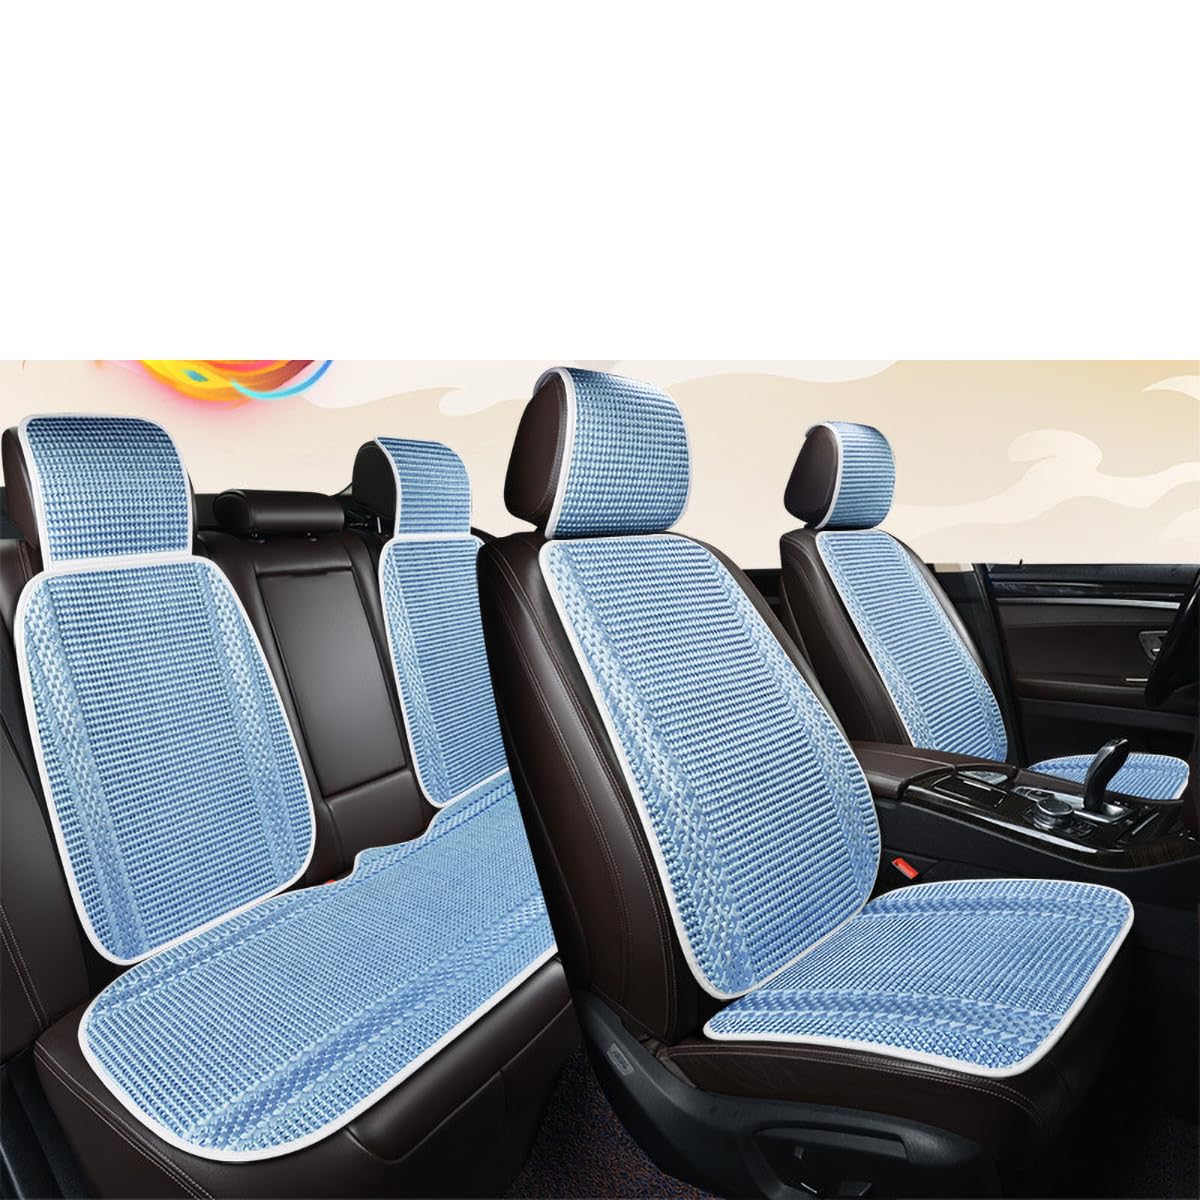 ASNAT Belüfteter Autositzbezug den Sommer für Citroen C-Zero electric drive, Atmungsaktiv Und Bequem, Anti Rutsch Autositzschoner, D-blue-7PCS von ASNAT